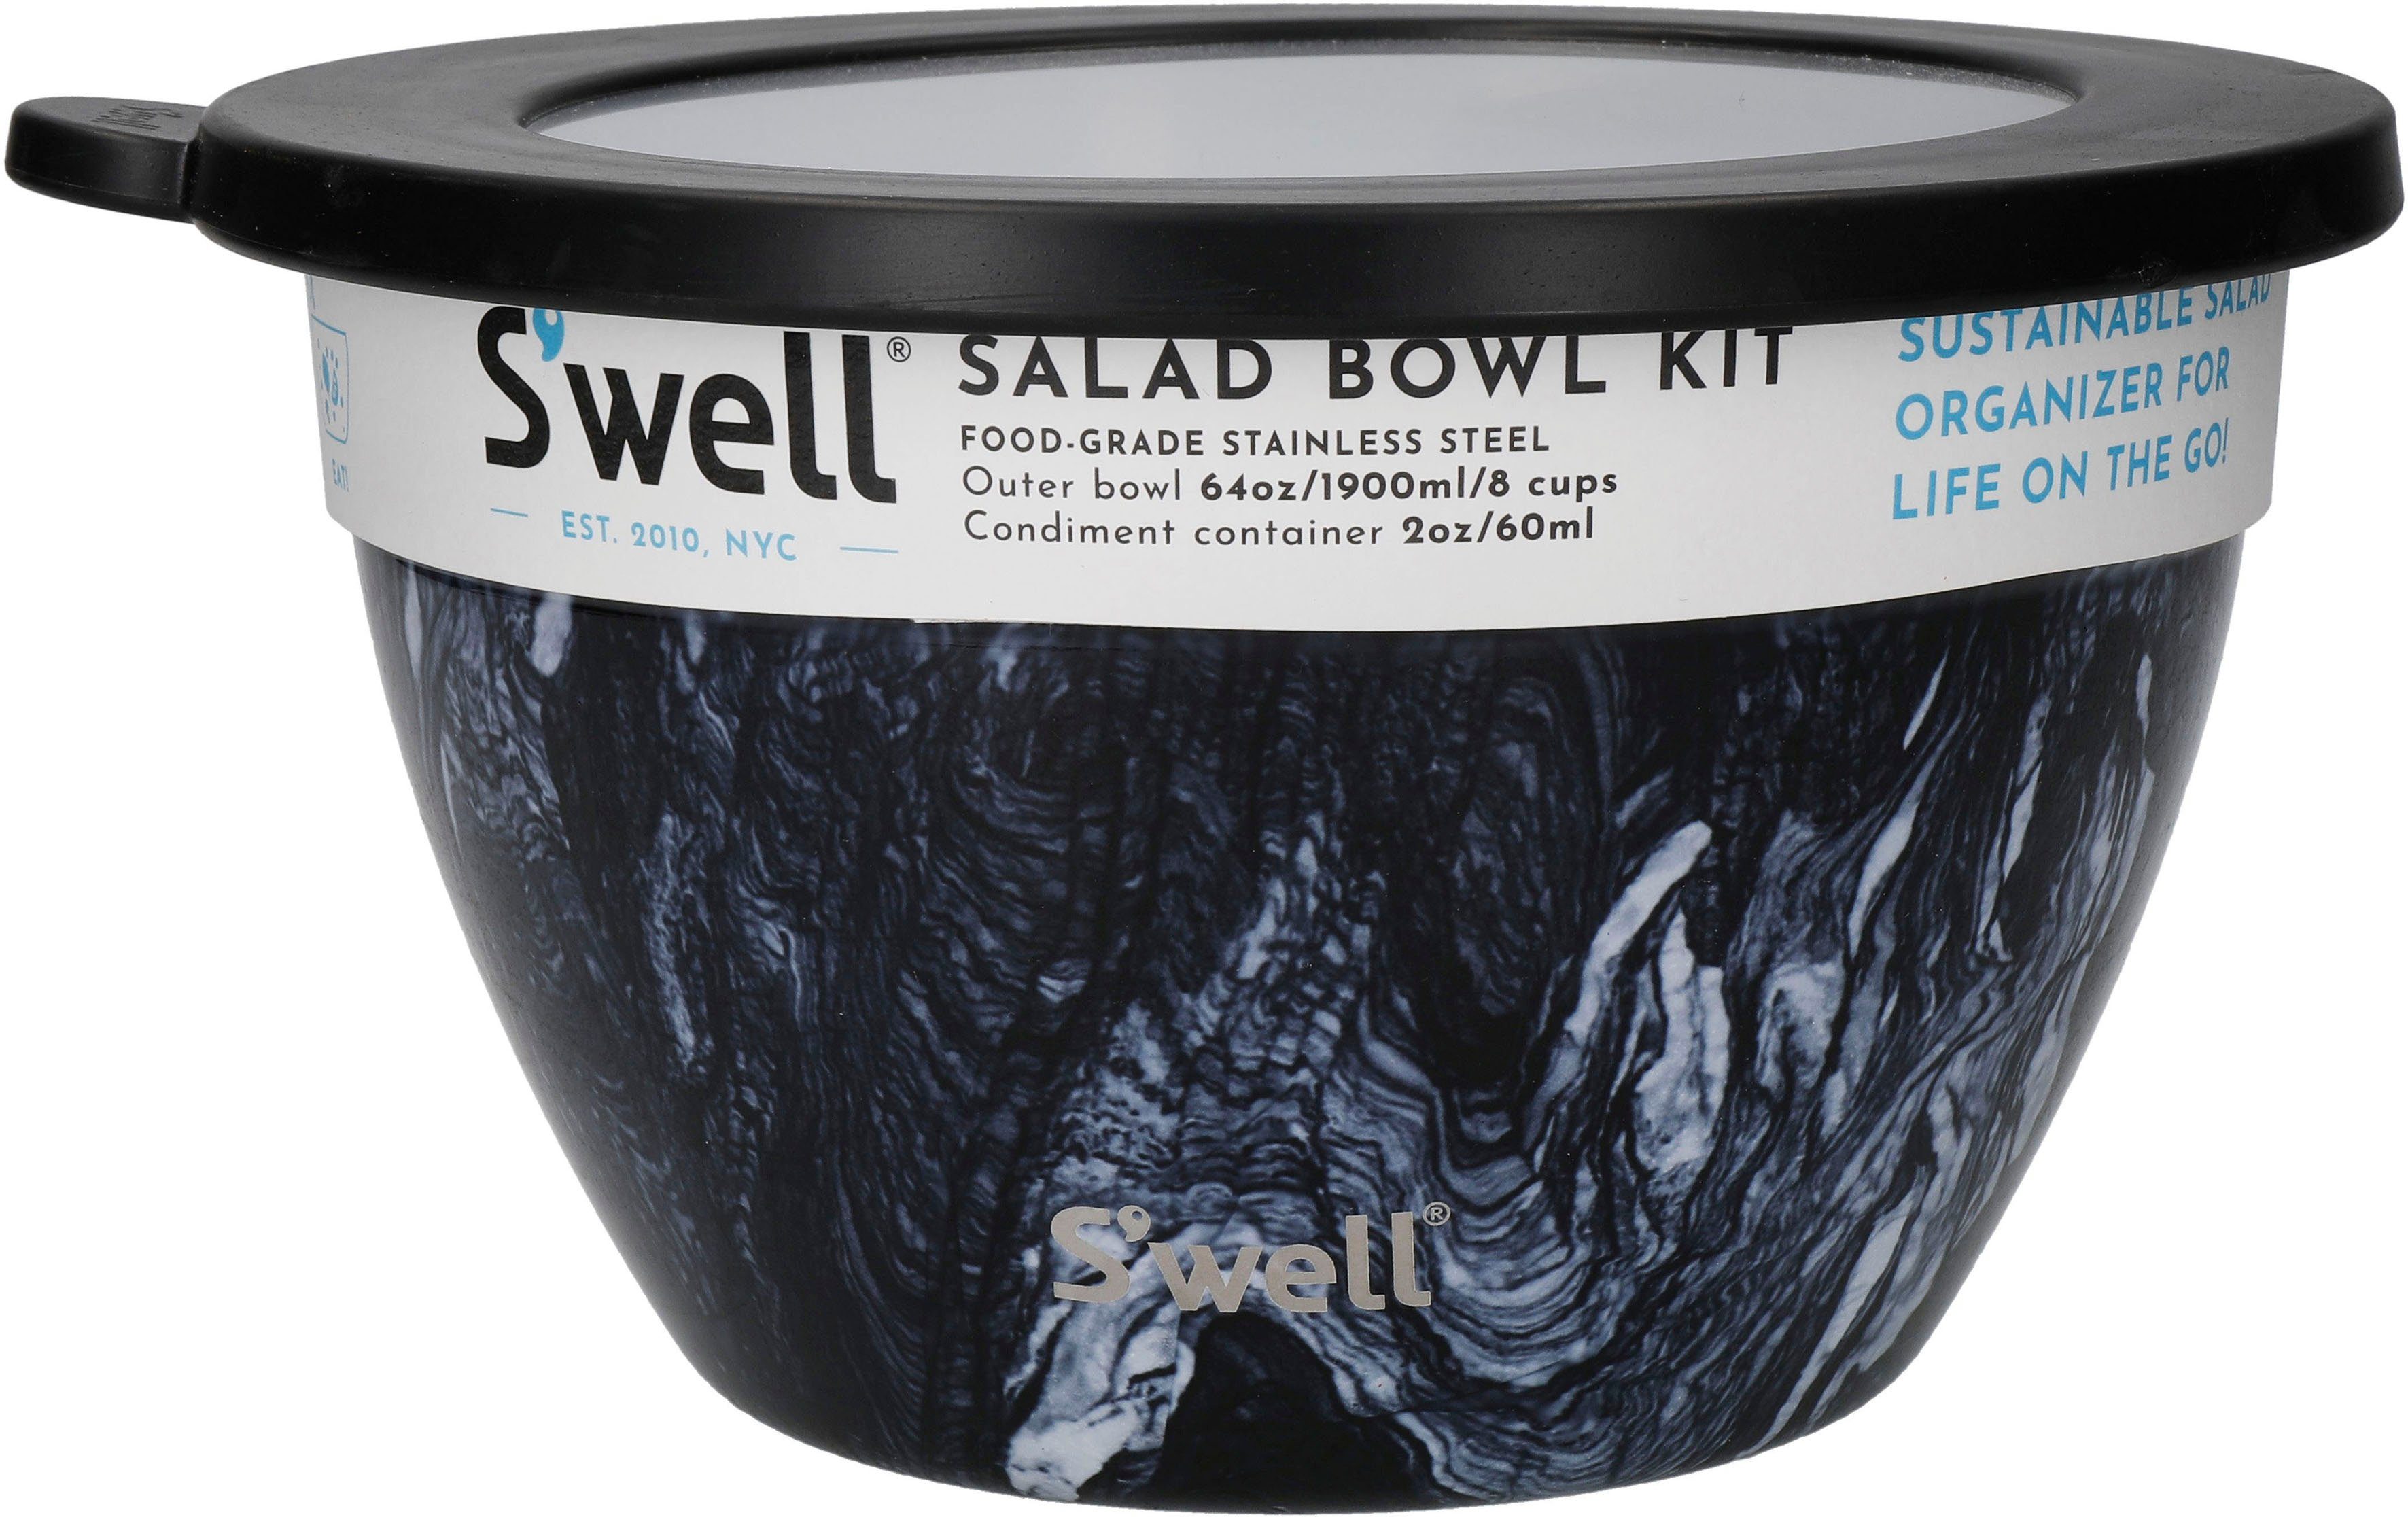 S'well Salatschüssel S'well 1.9L, Azurit-Marmor vakuumisolierten Außenschale Therma-S'well®-Technologie, Edelstahl, (3-tlg), Salad Bowl Kit, Onyx